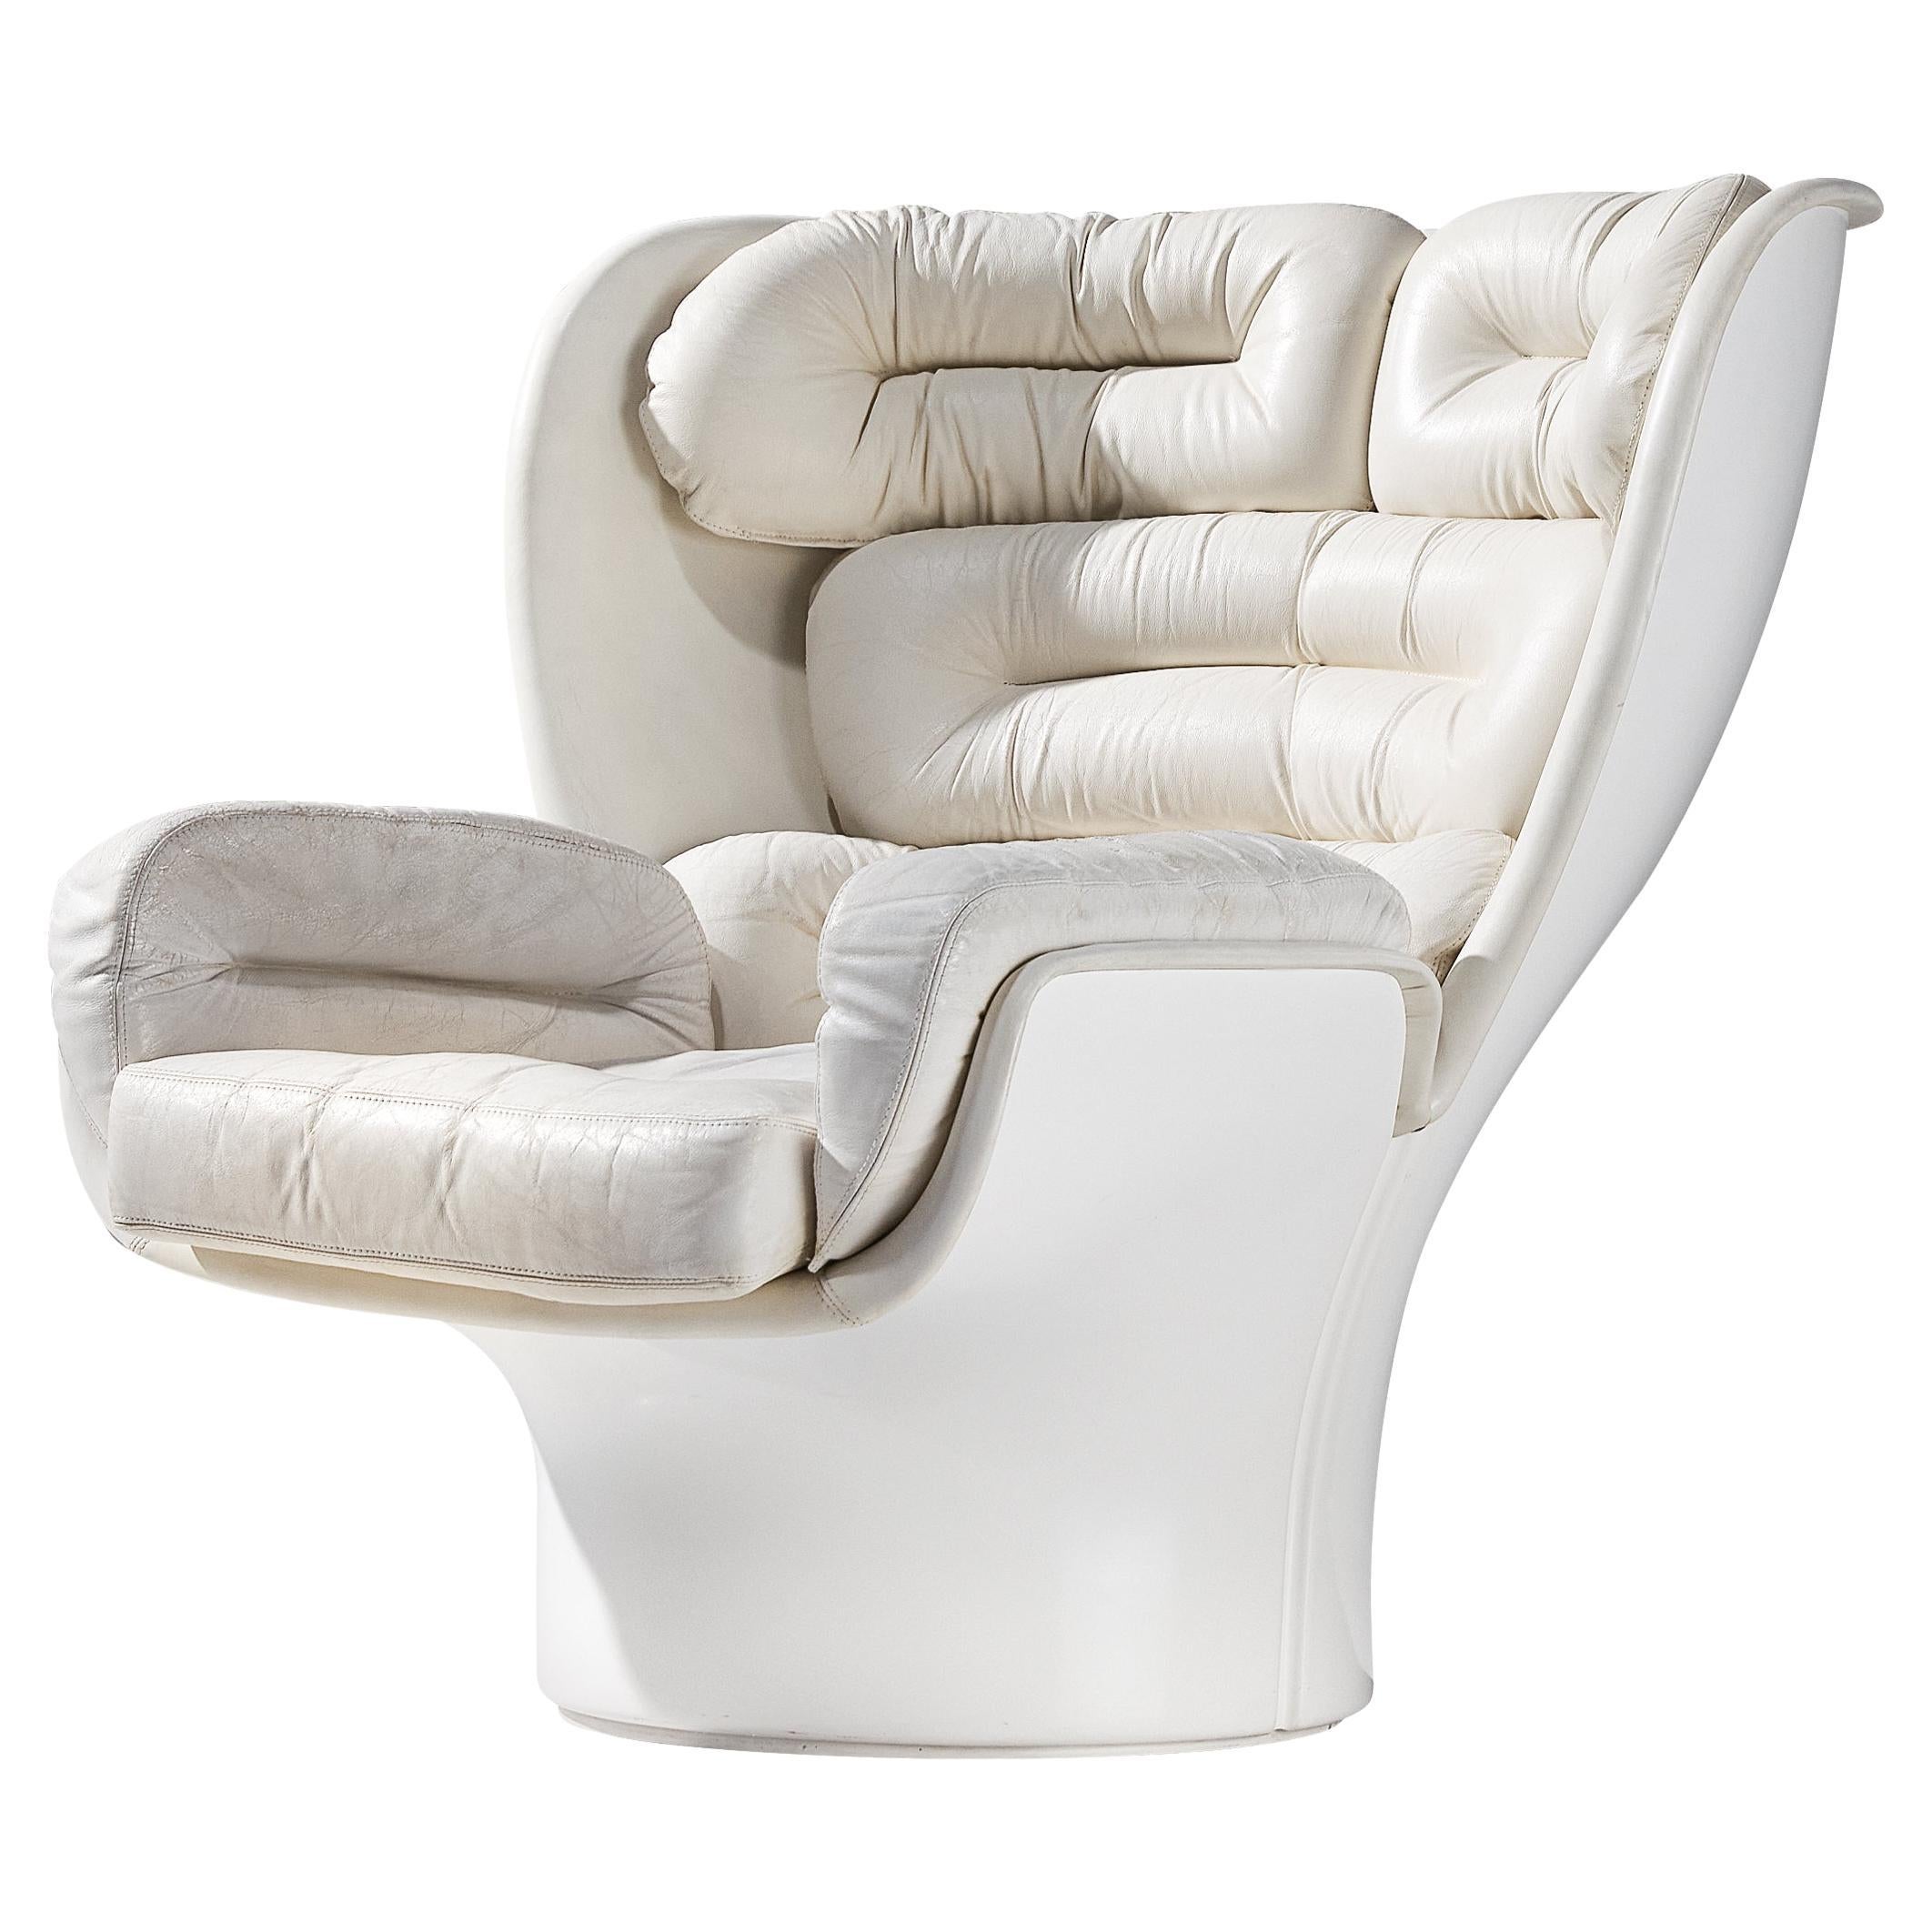 Joe Colombo 'Elda' Lounge Chair in White Leather and Fiberglass